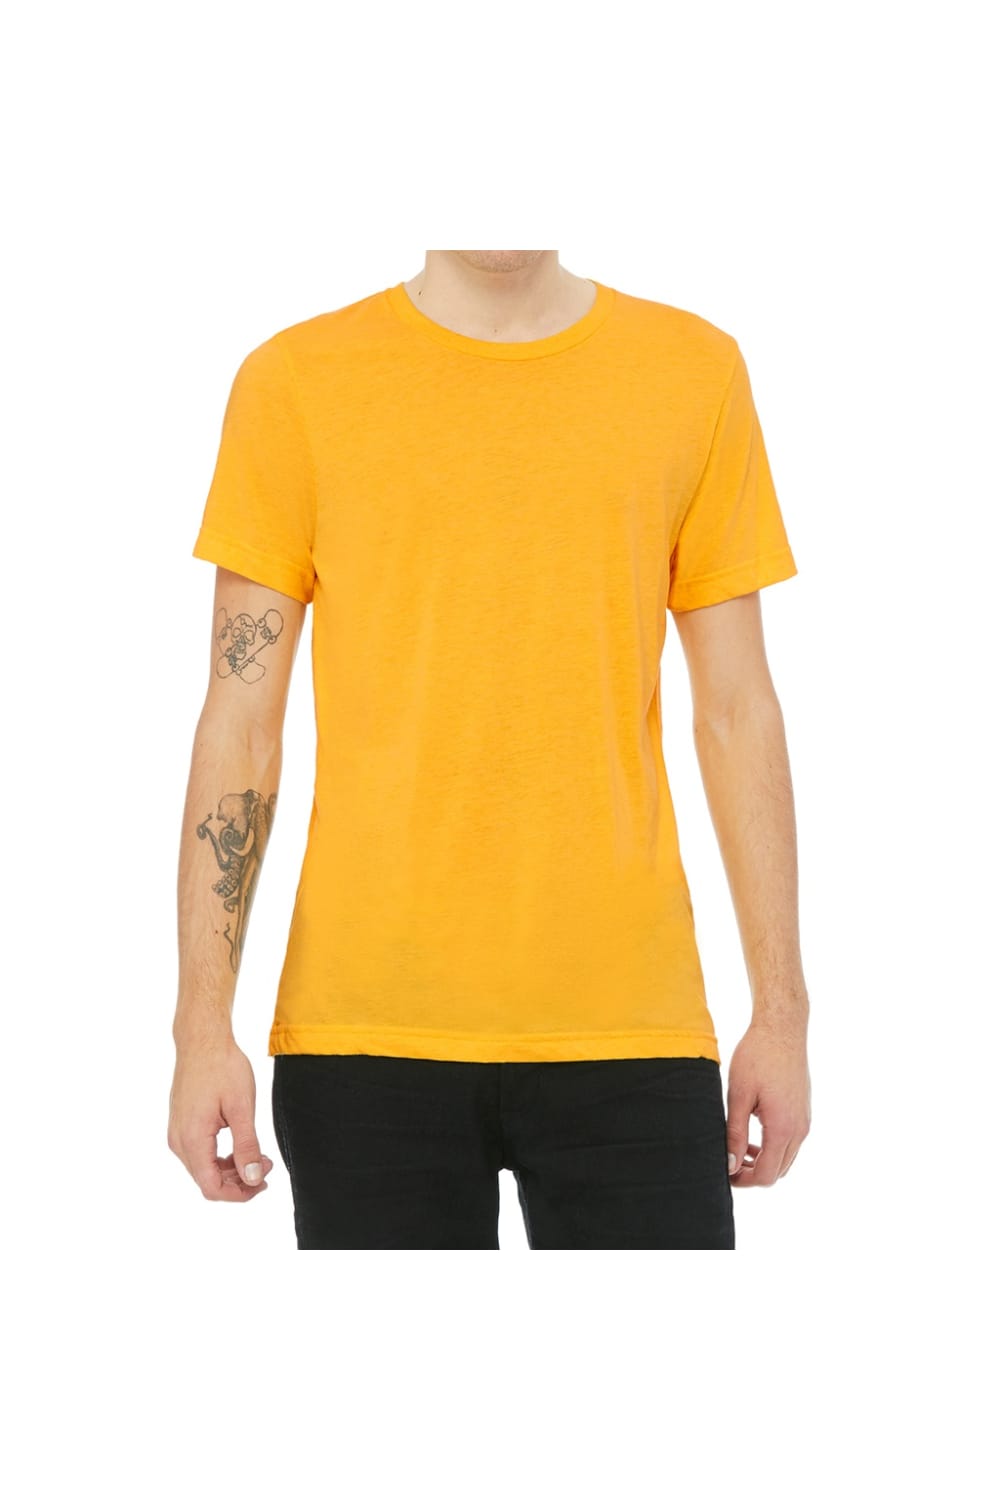 Bella + Canvas Adults Unisex Tri-Blend T-Shirt (Yellow Gold Triblend)